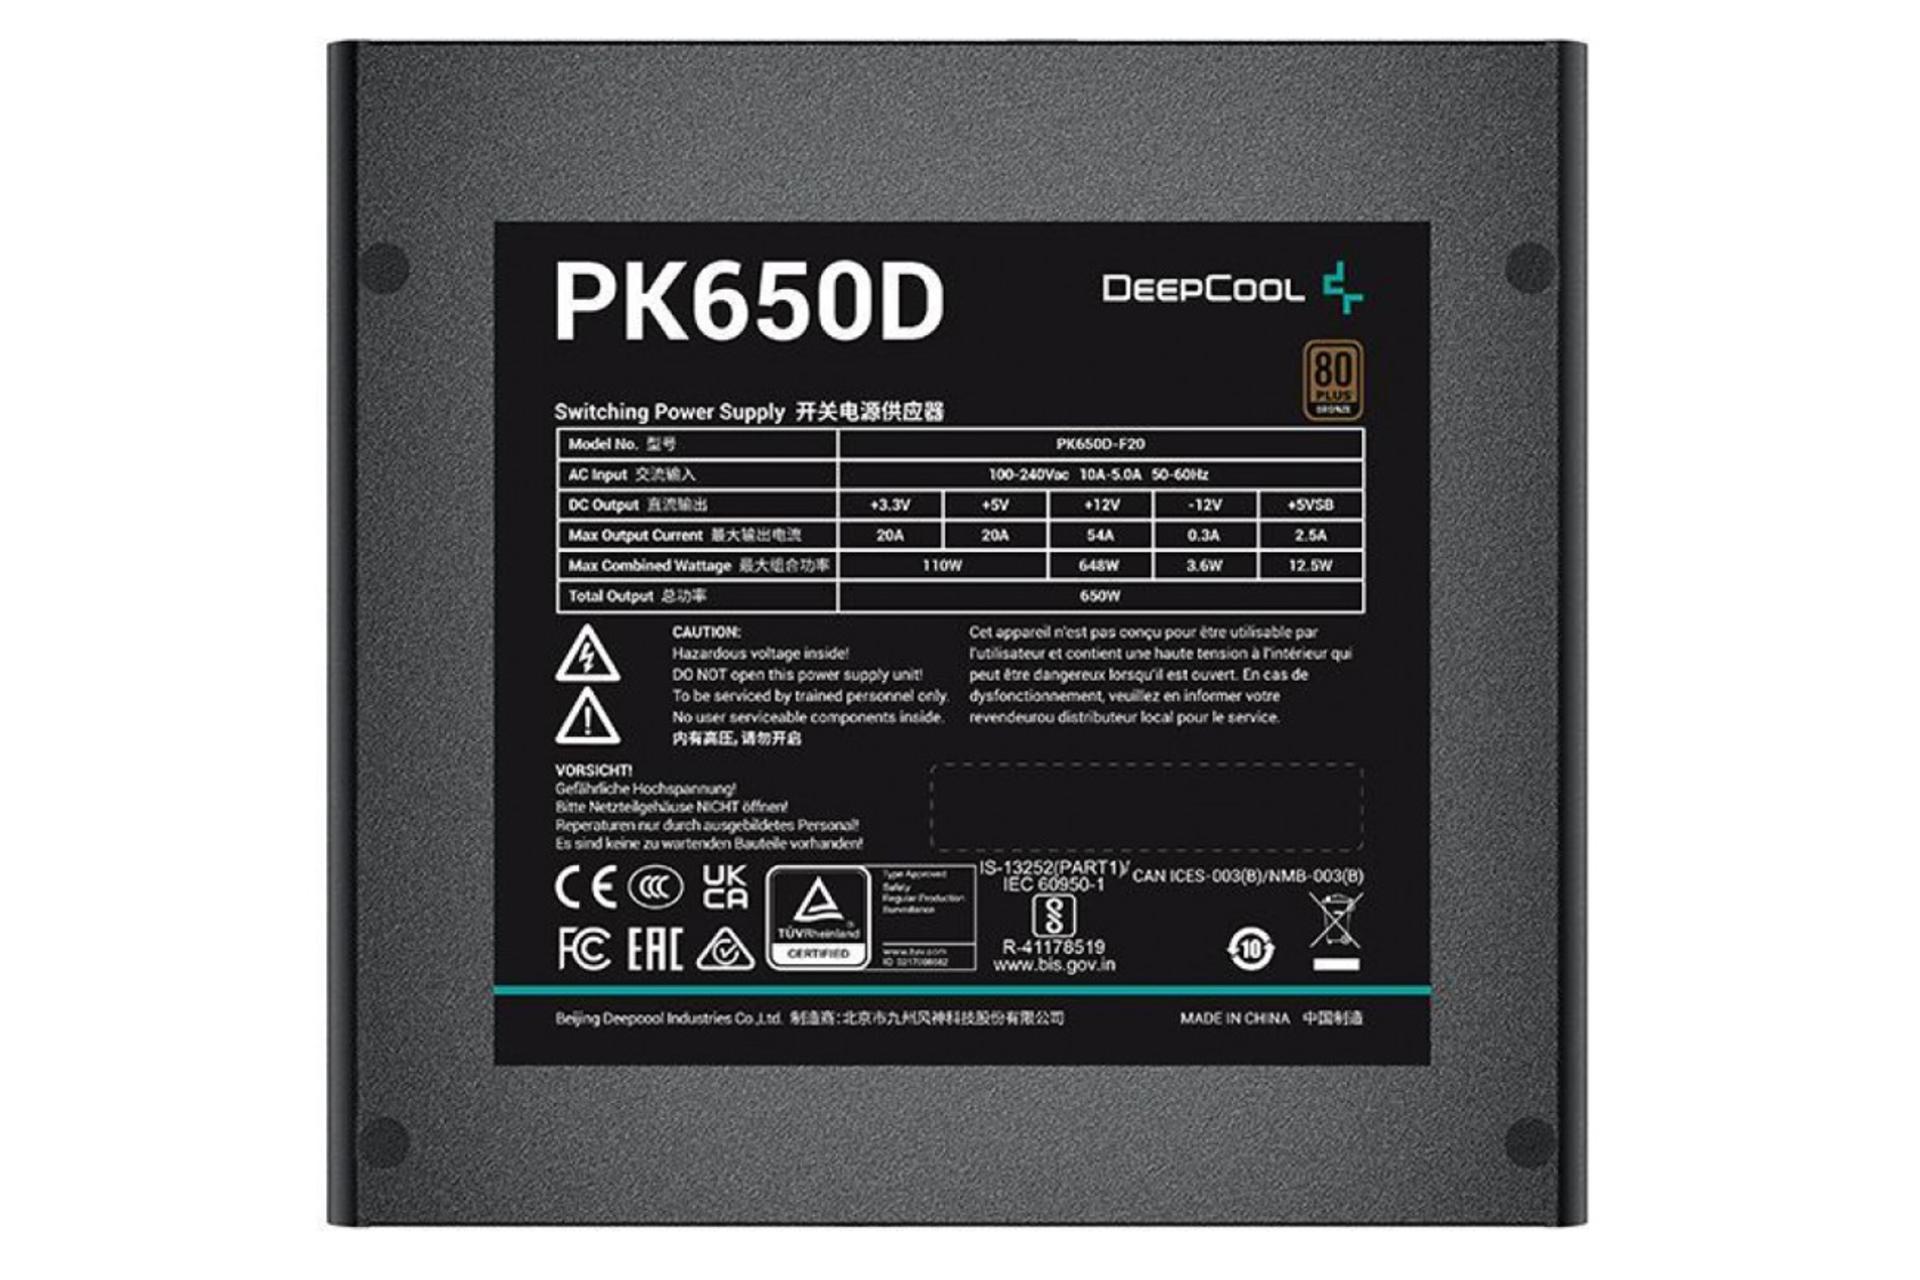 توان پاور کامپیوتر دیپ کول DEEPCOOL PK650D با توان 650 وات